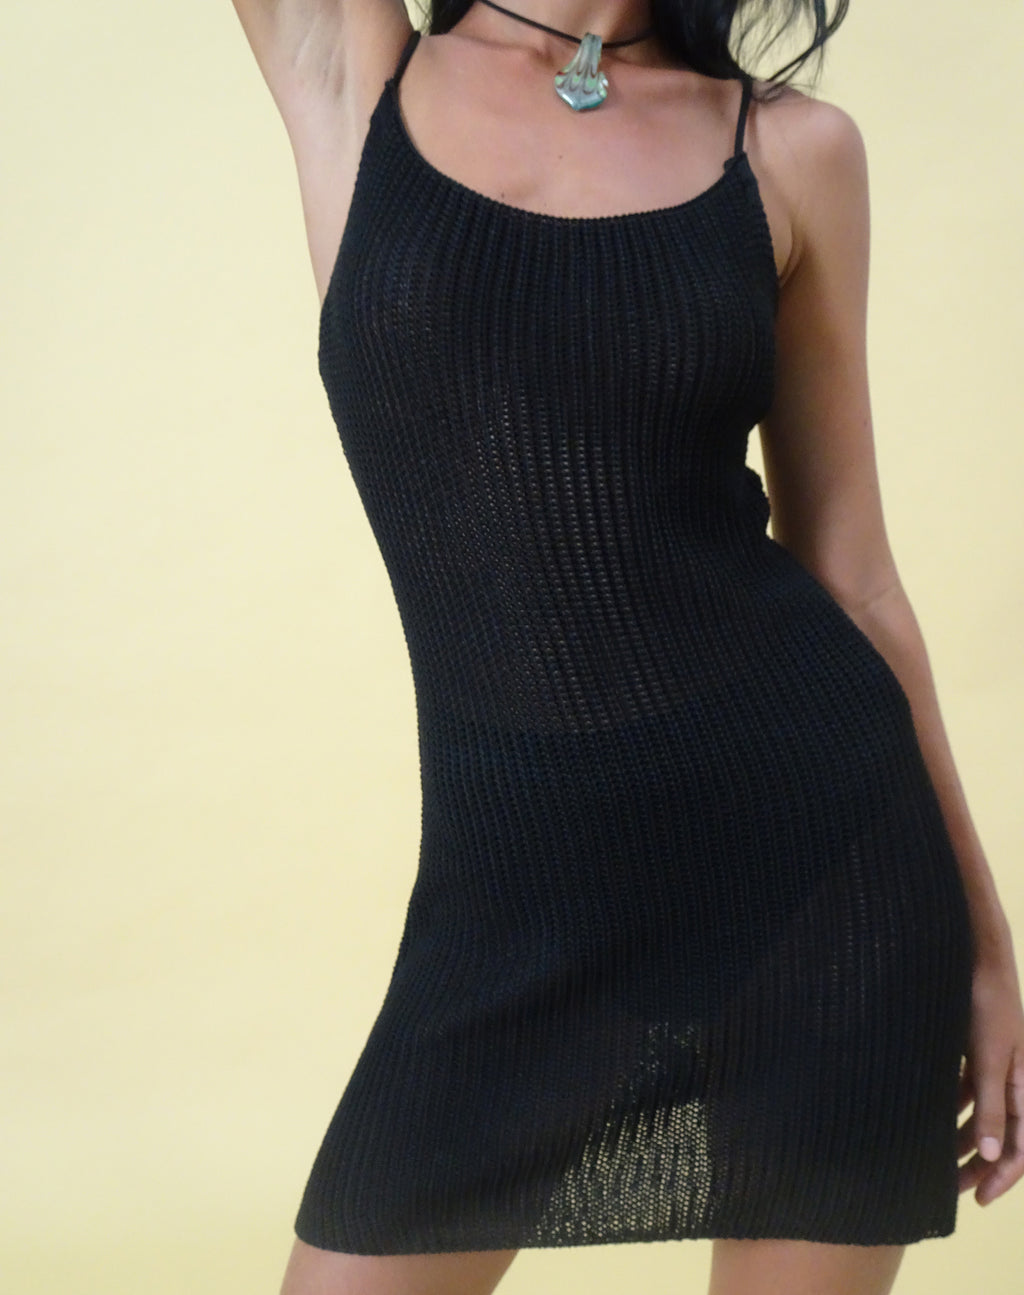 Chiara Knitted Mini Dress in Black